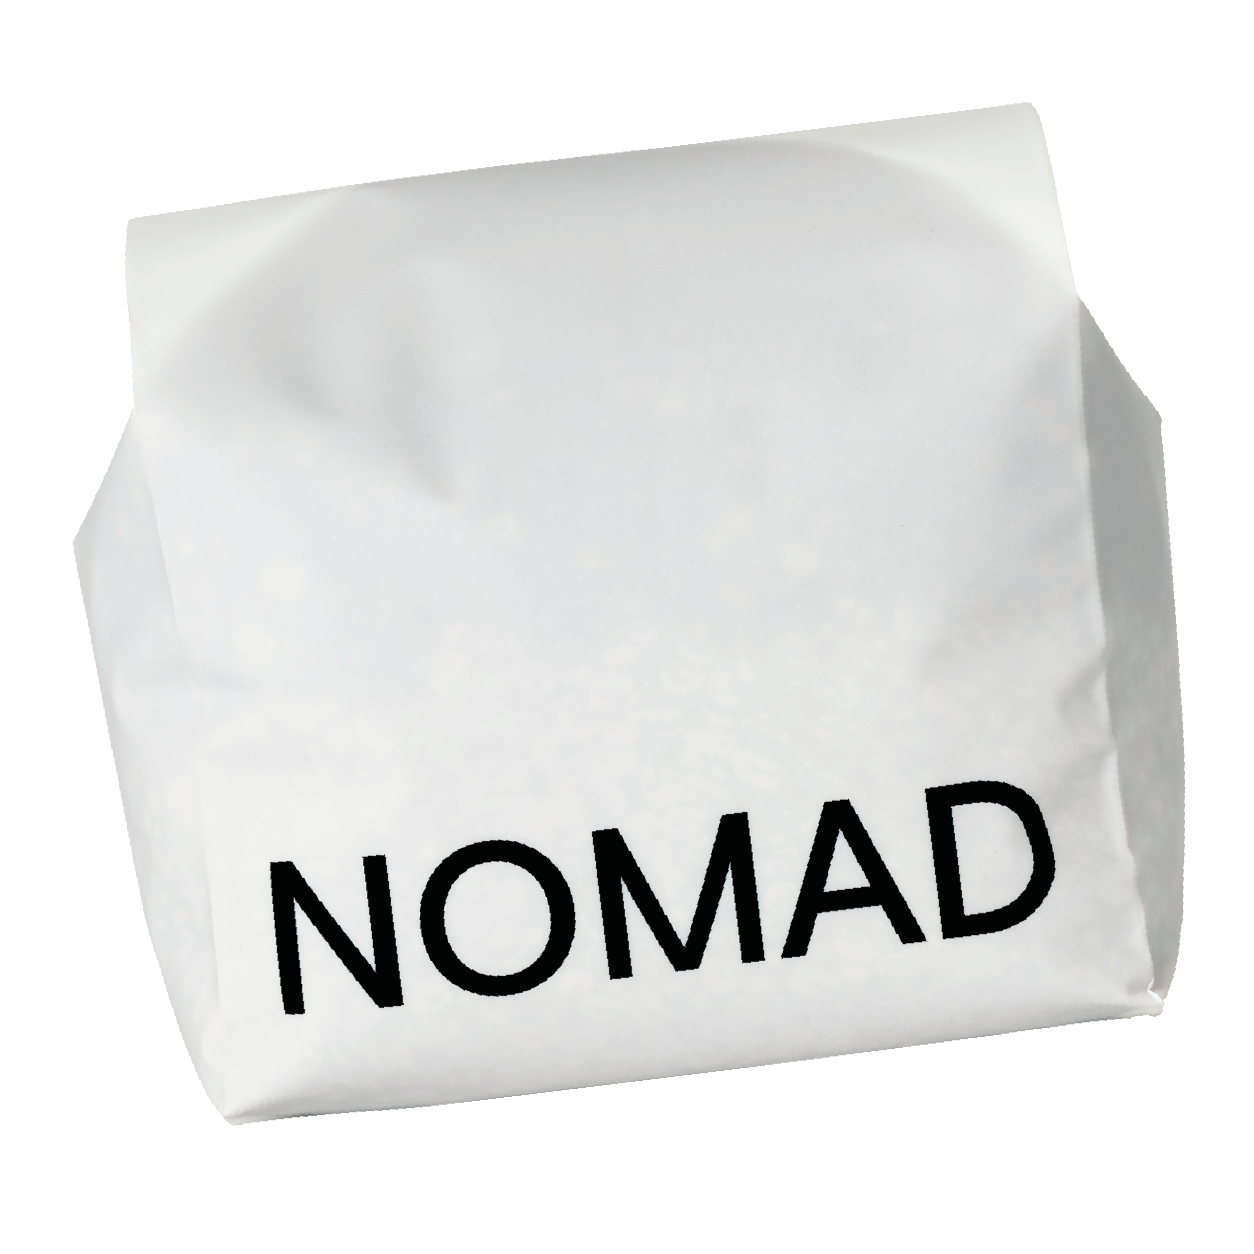 Nomad Coffee